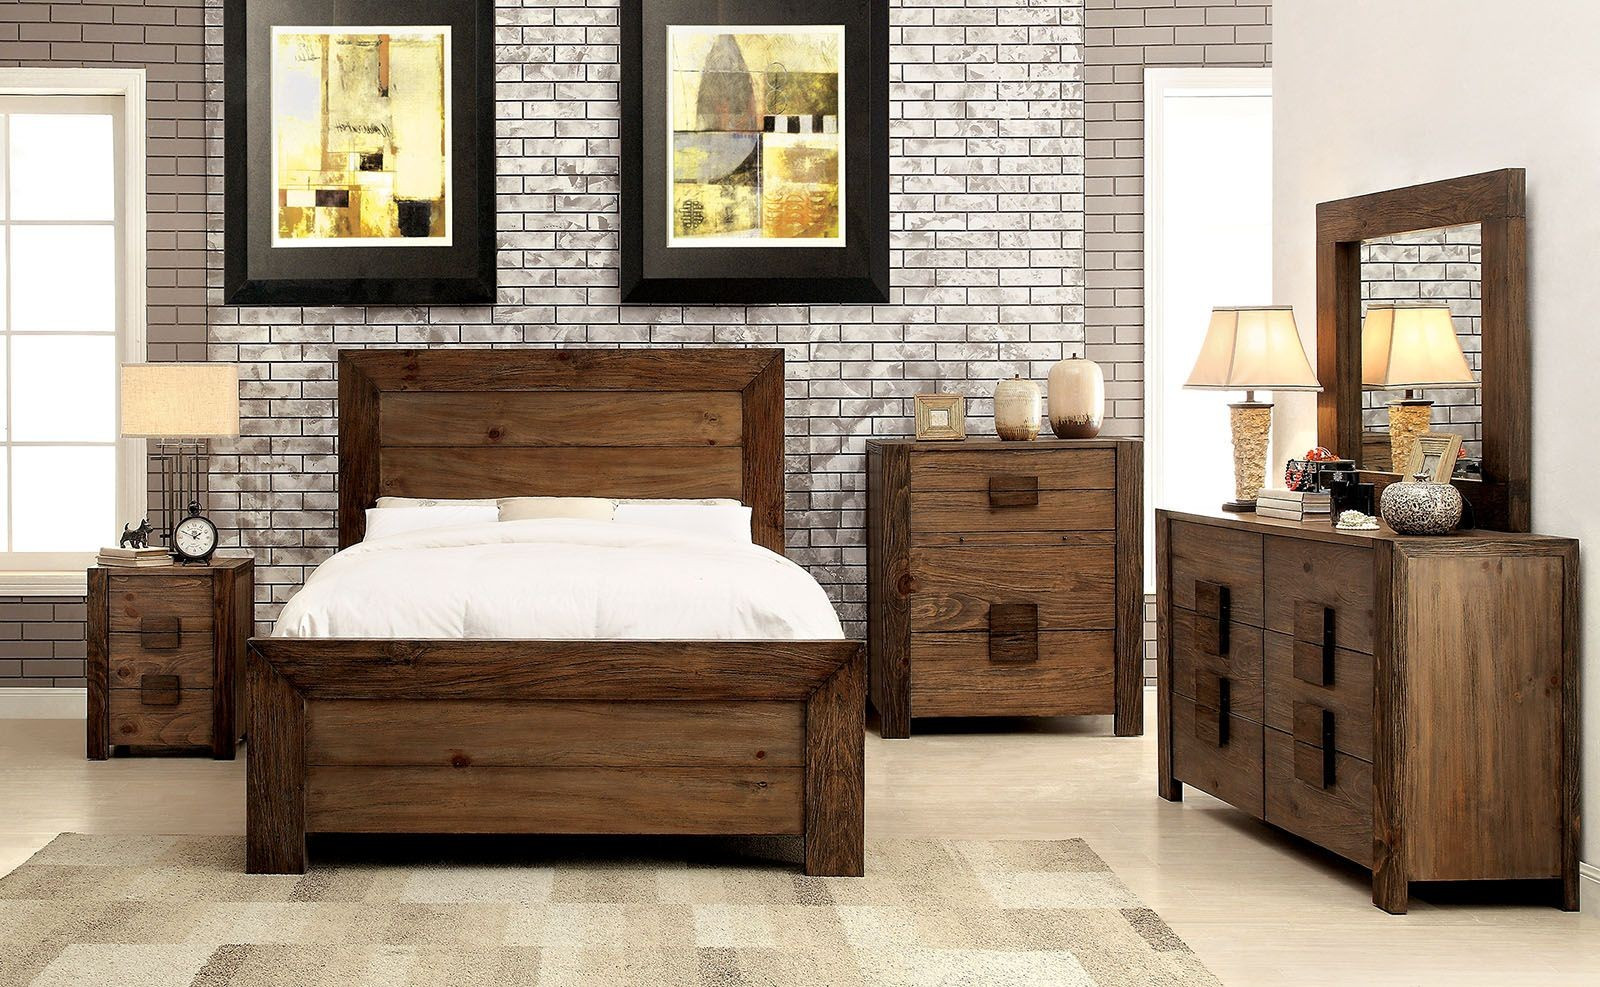 Rustic Bedroom Furniture
 Aveiro Rustic Natural Panel Bedroom Set from Furniture of